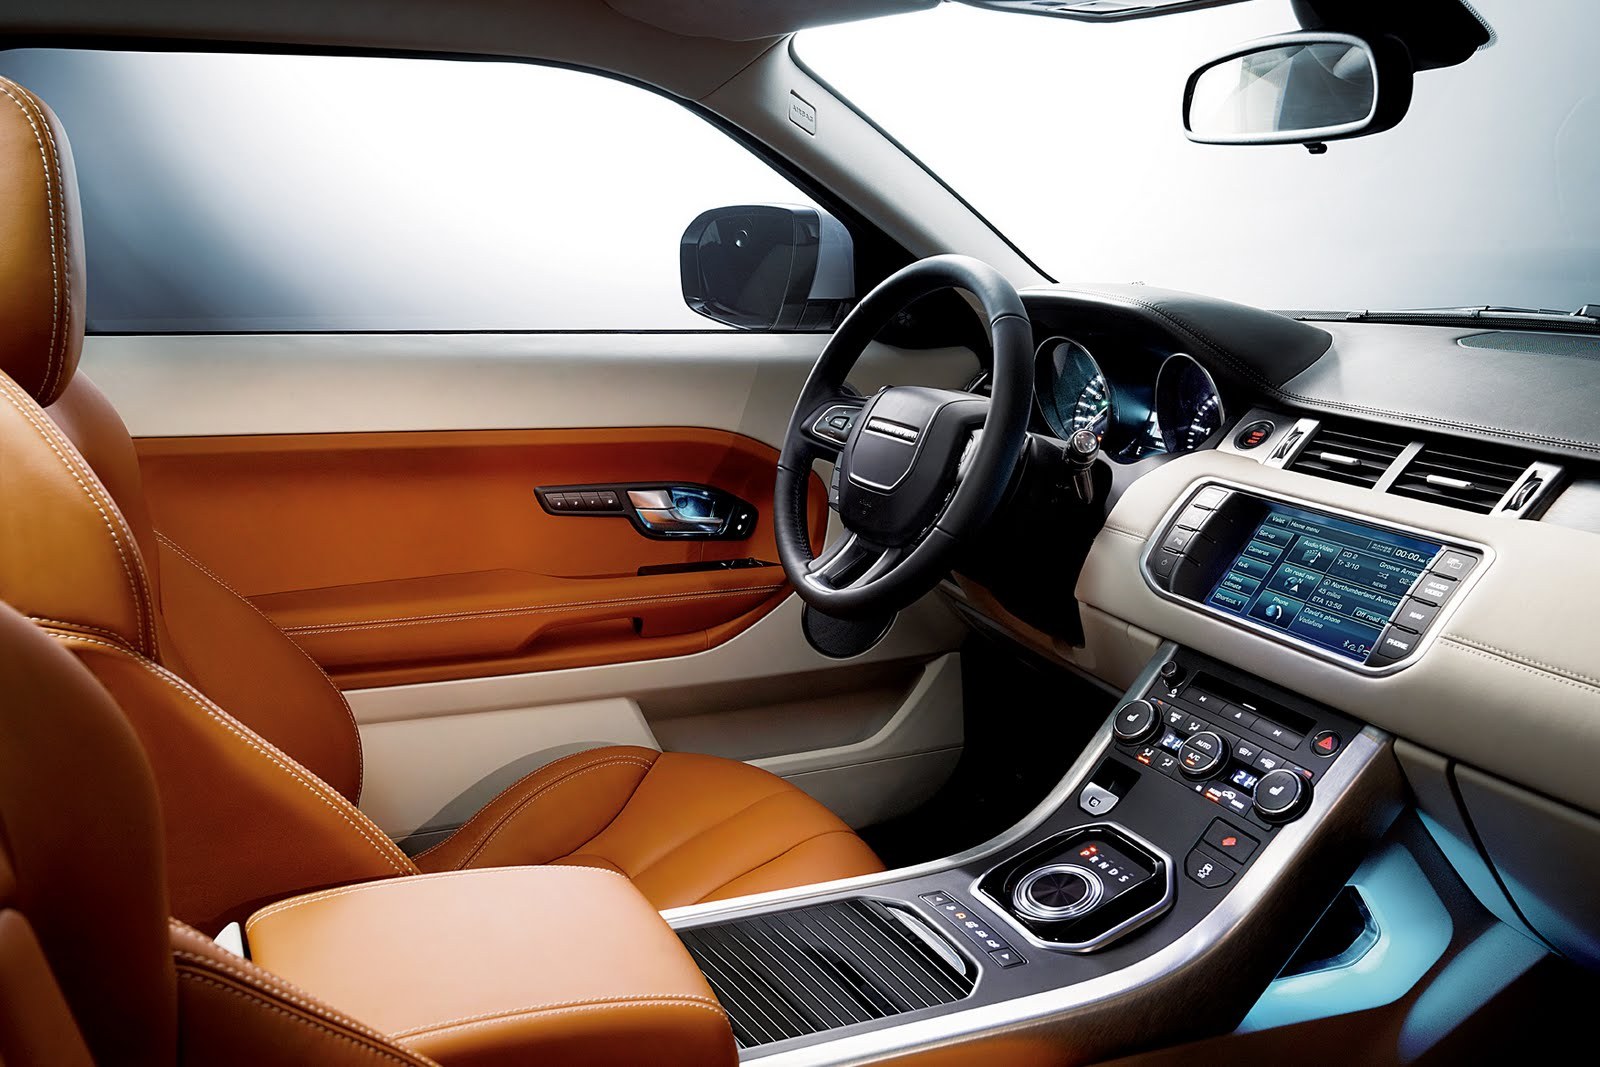 Range Rover Evoque ofera un interior princiar, cu multe dotari de ultima ora si materiale de calitate